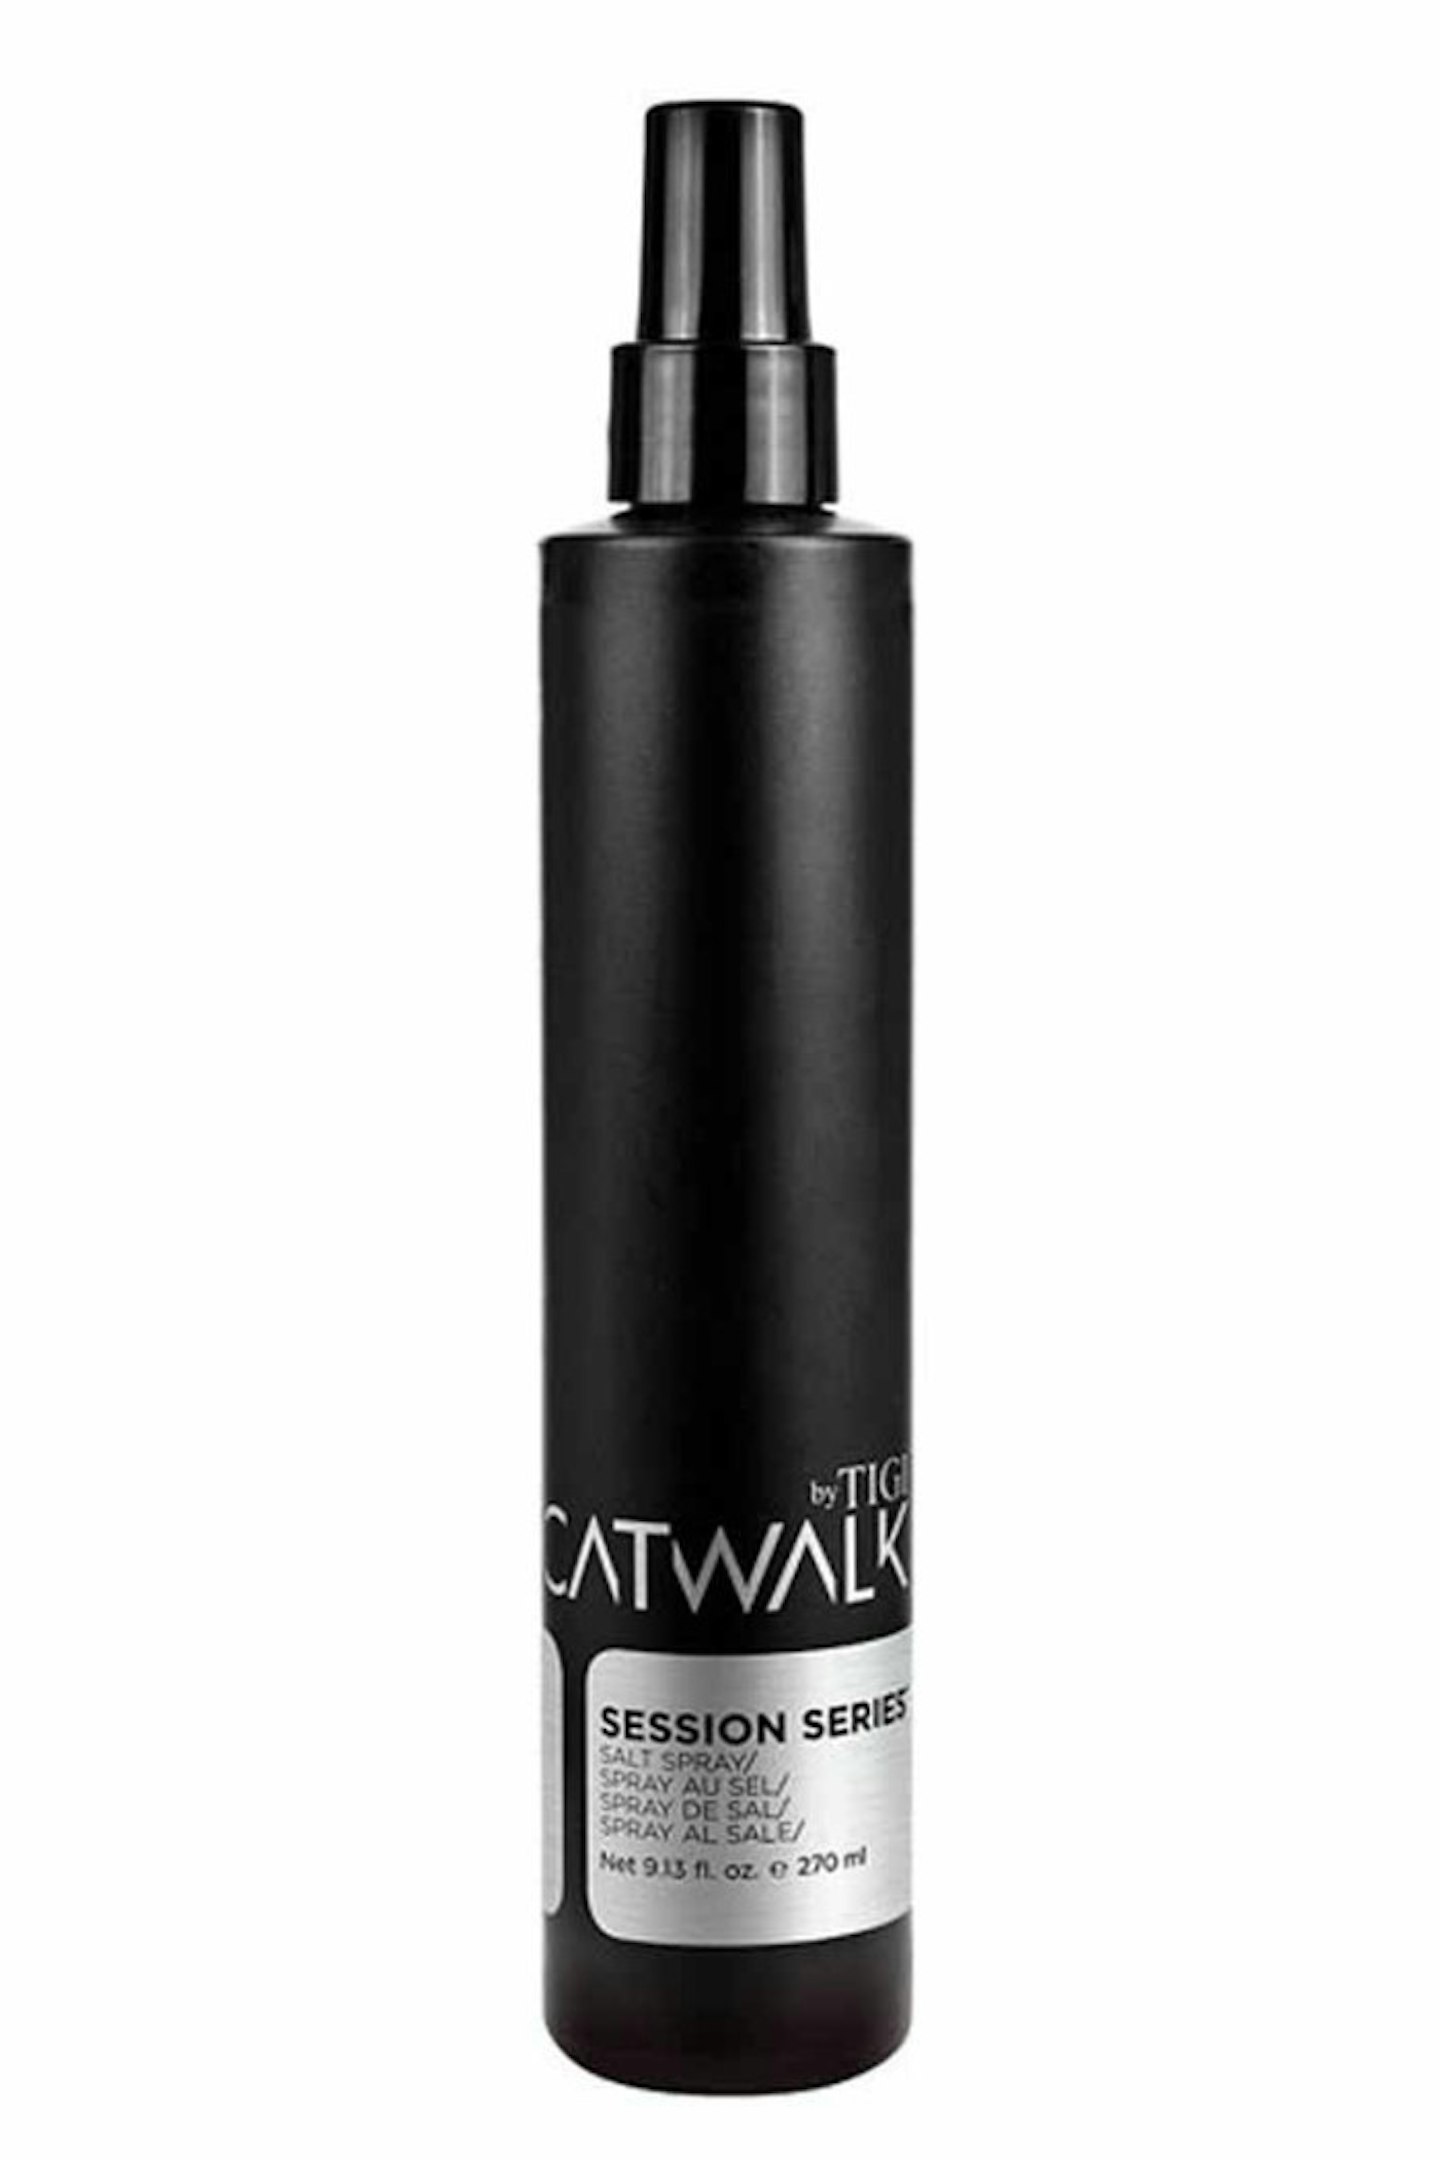 7. Tigi Catwalk Session Series Salt Spray, £14.35